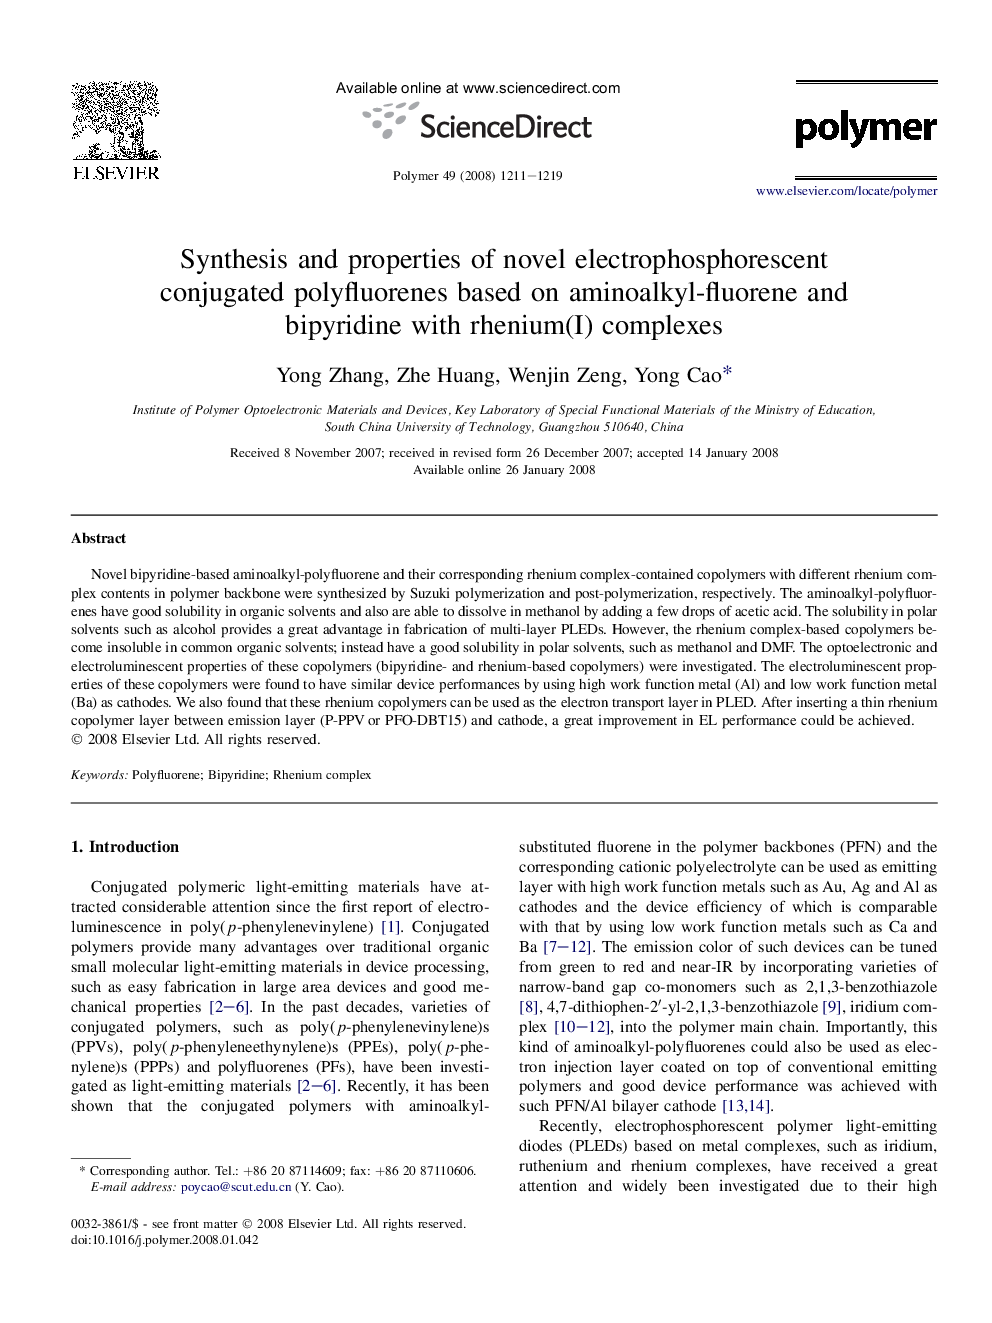 Synthesis and properties of novel electrophosphorescent conjugated polyfluorenes based on aminoalkyl-fluorene and bipyridine with rhenium(I) complexes